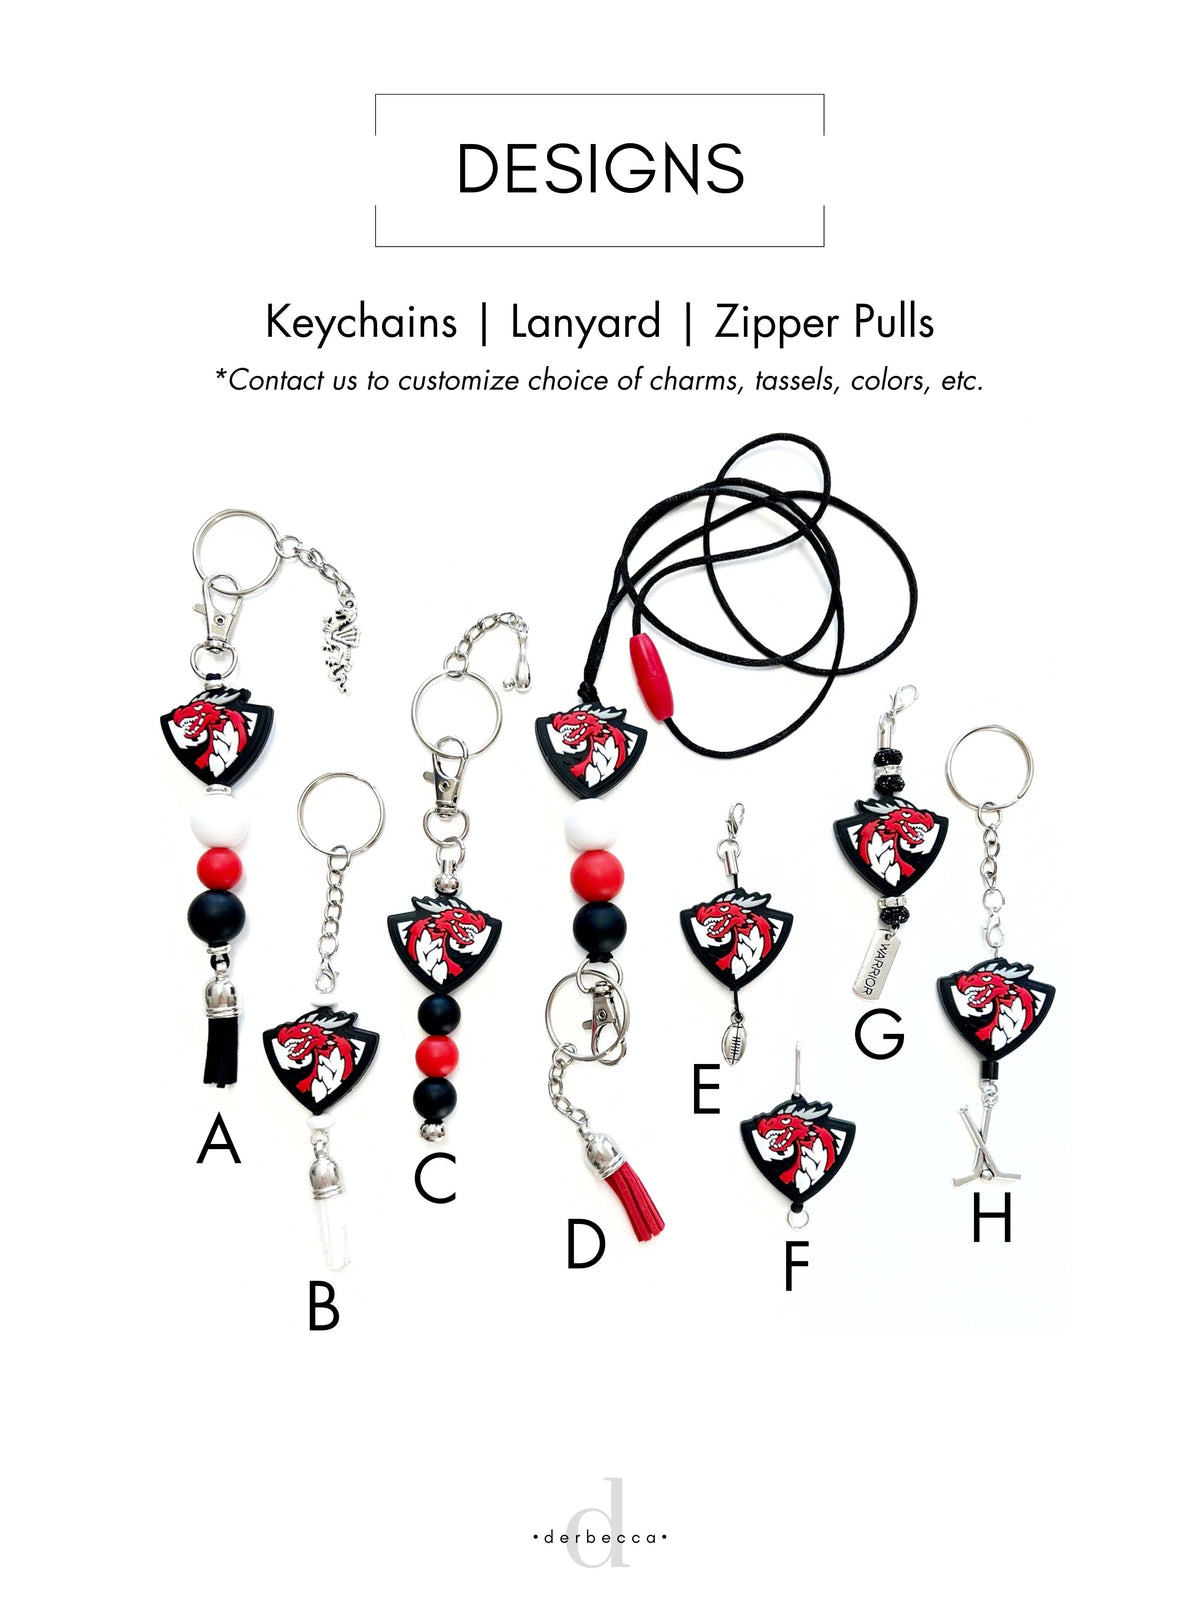 Keychain, Lanyard, Zipper Pull Designs for Dragon Accessory